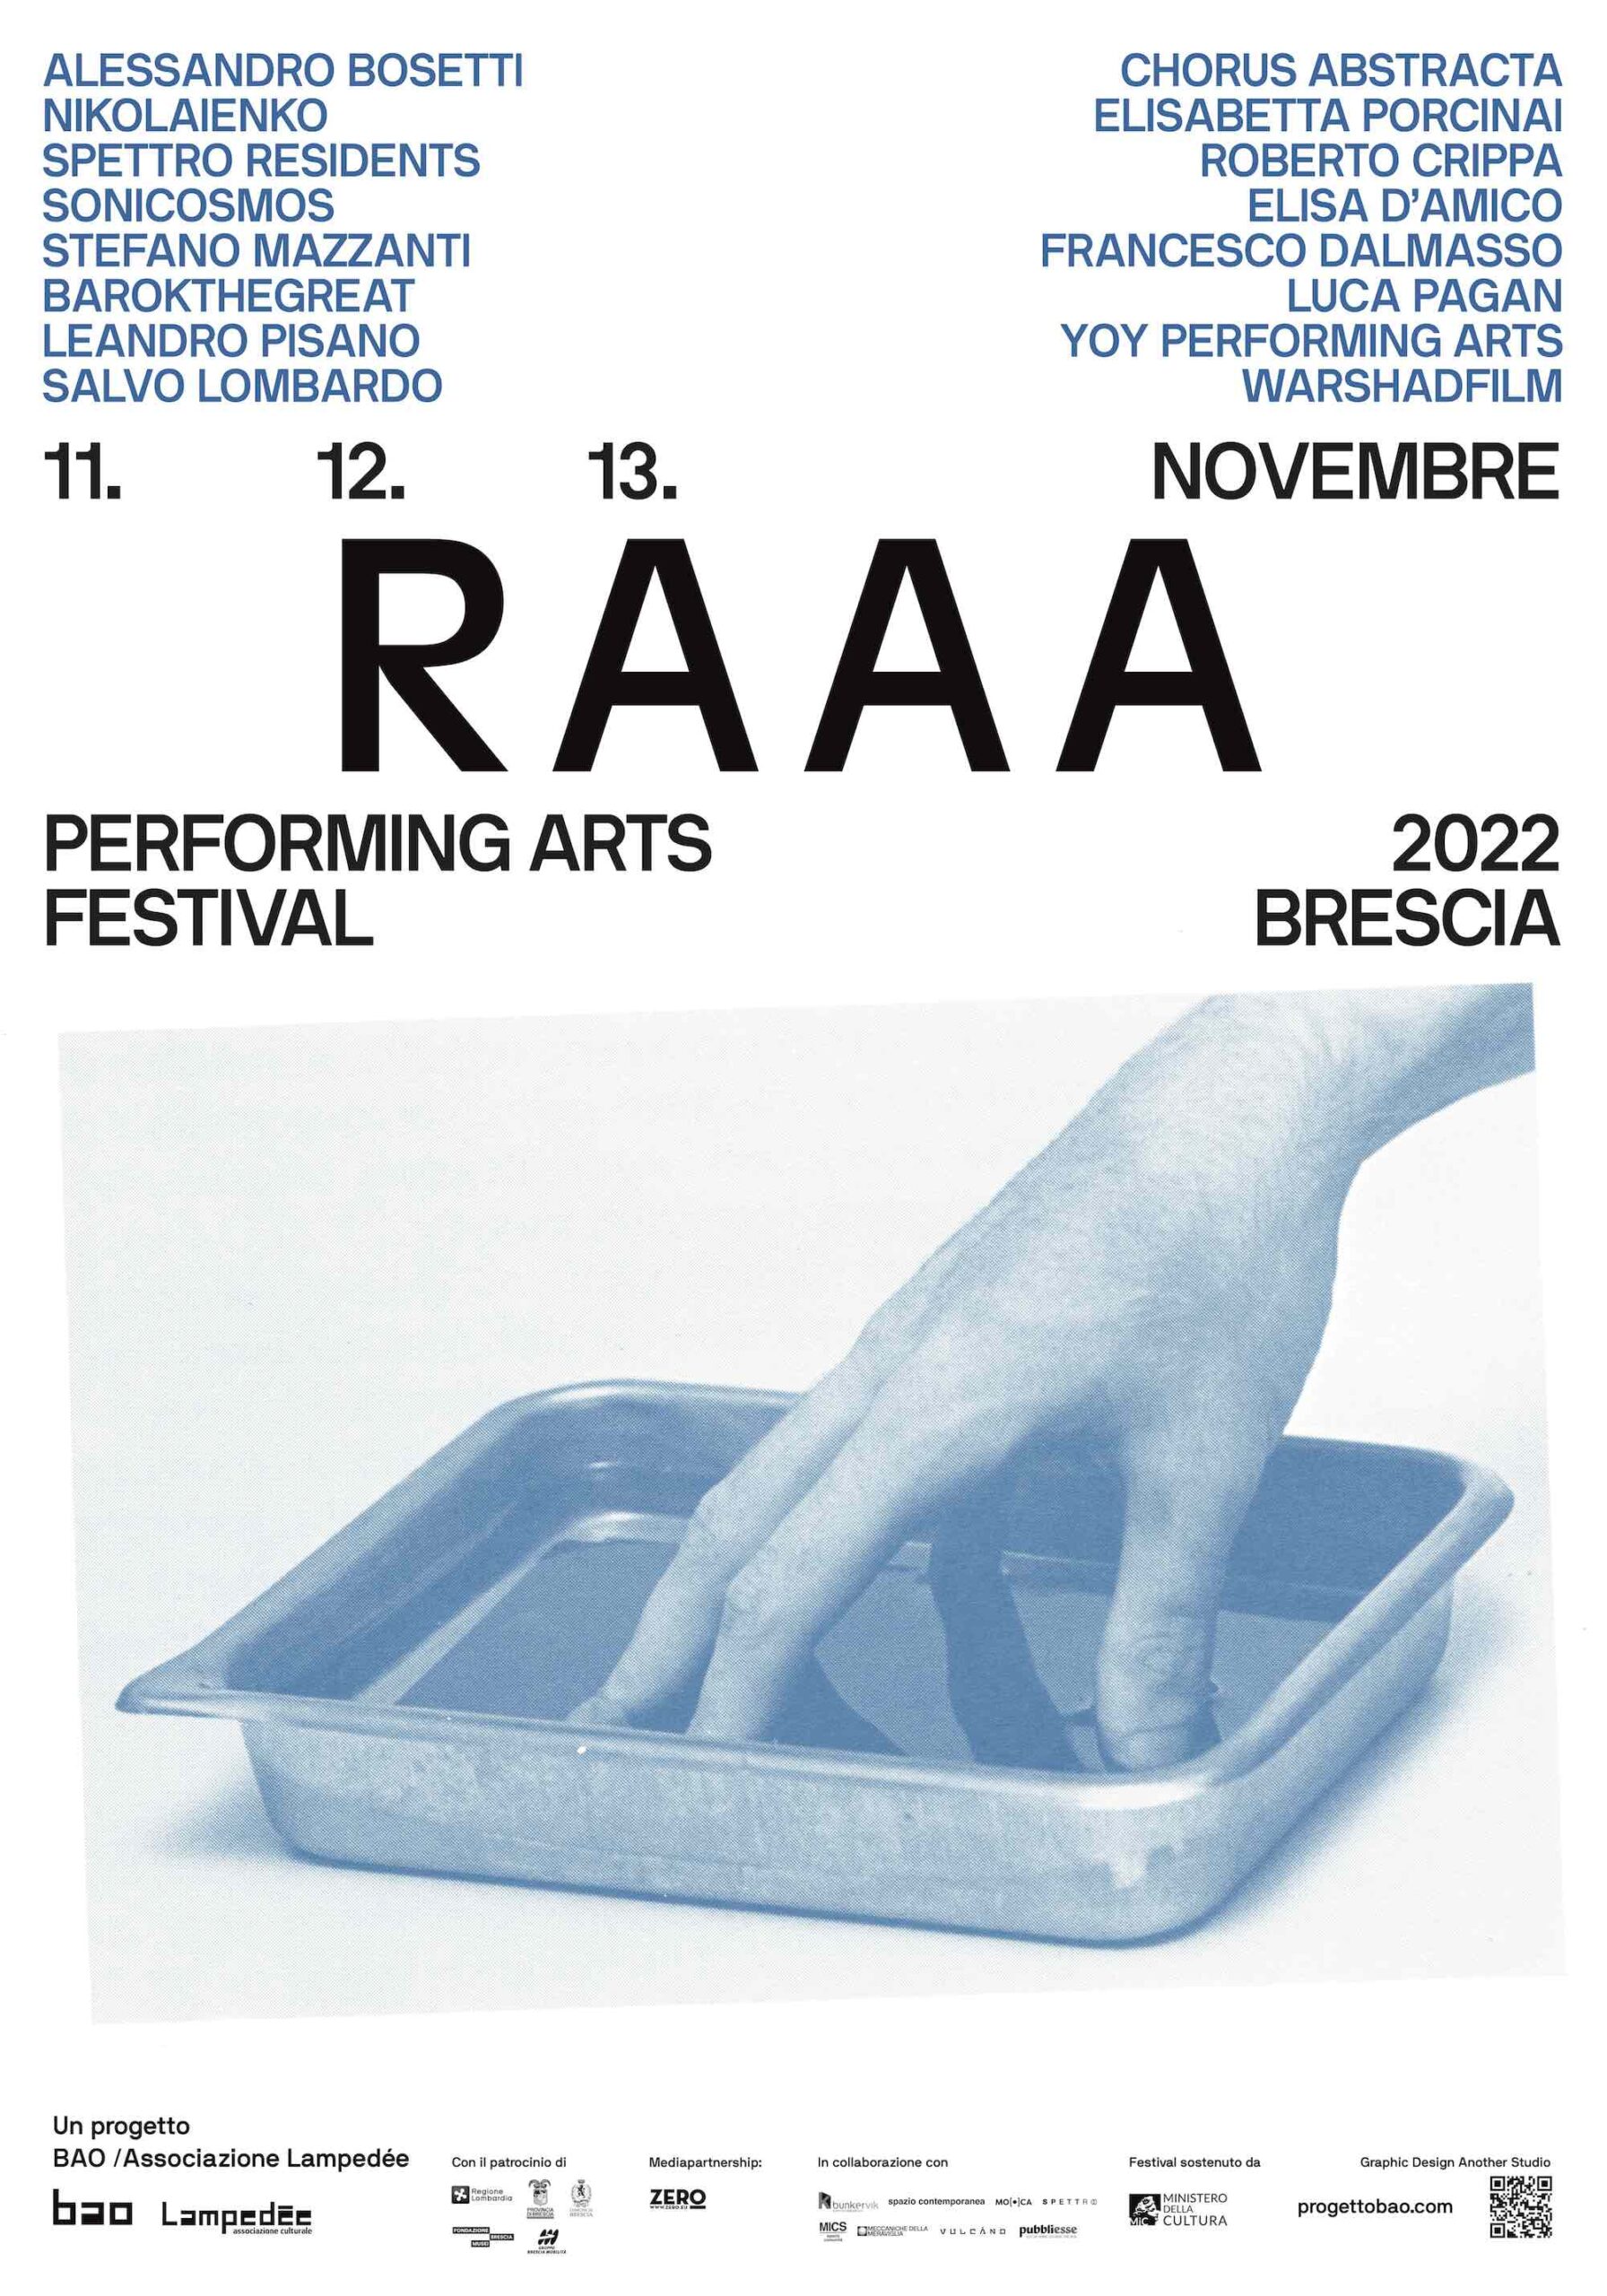 RAAA Performing Arts Festival